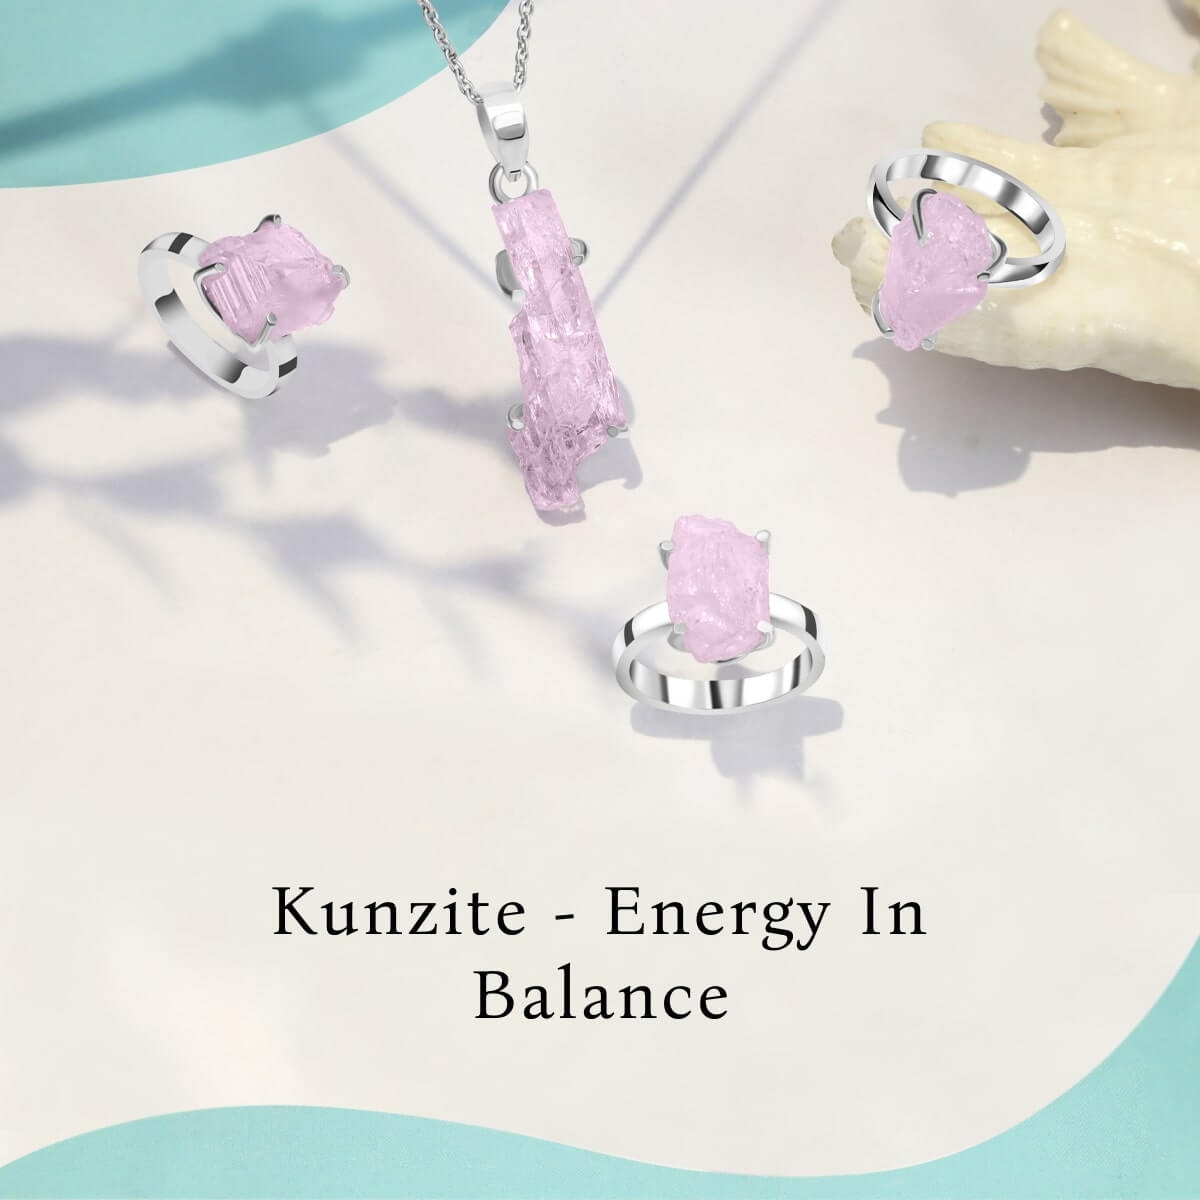 Uses of Kunzite Jewelry